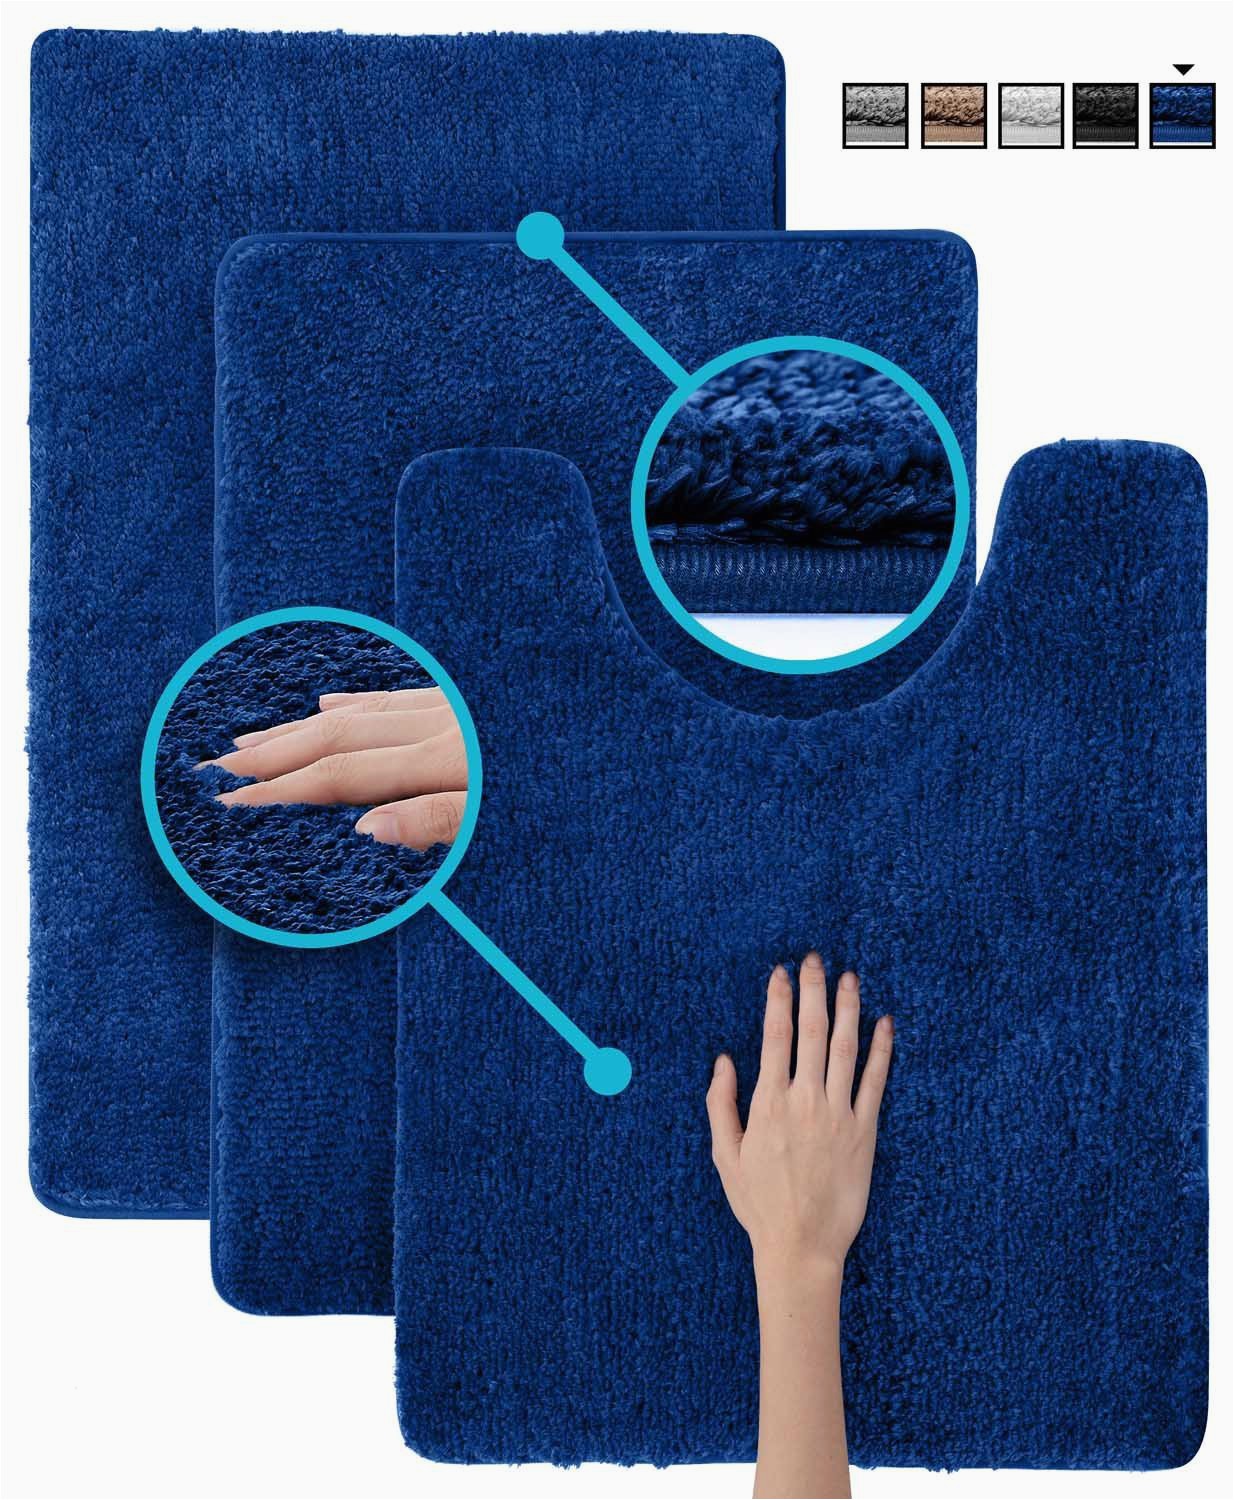 Plush Bath Rug Sets 3 Pc Set Luxuriously Plush Microfiber Bathroom Rugs